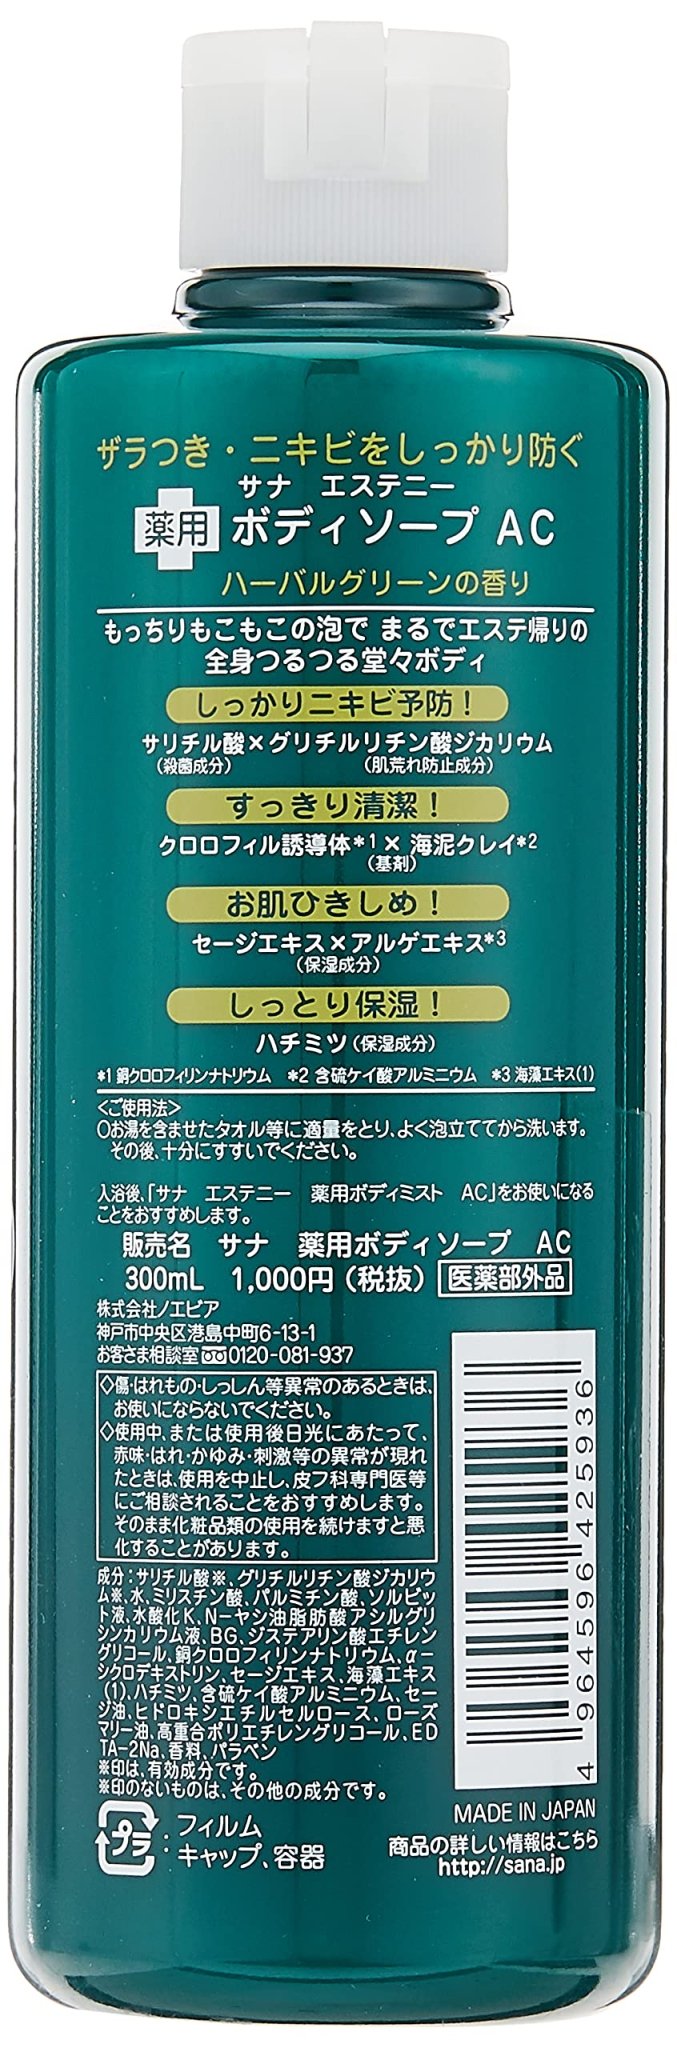 Ettusais Japan Liquid Eyeliner Wp Black Waterproof Super Fine Brush Quick Dry Keep Color 0.1G - YOYO JAPAN